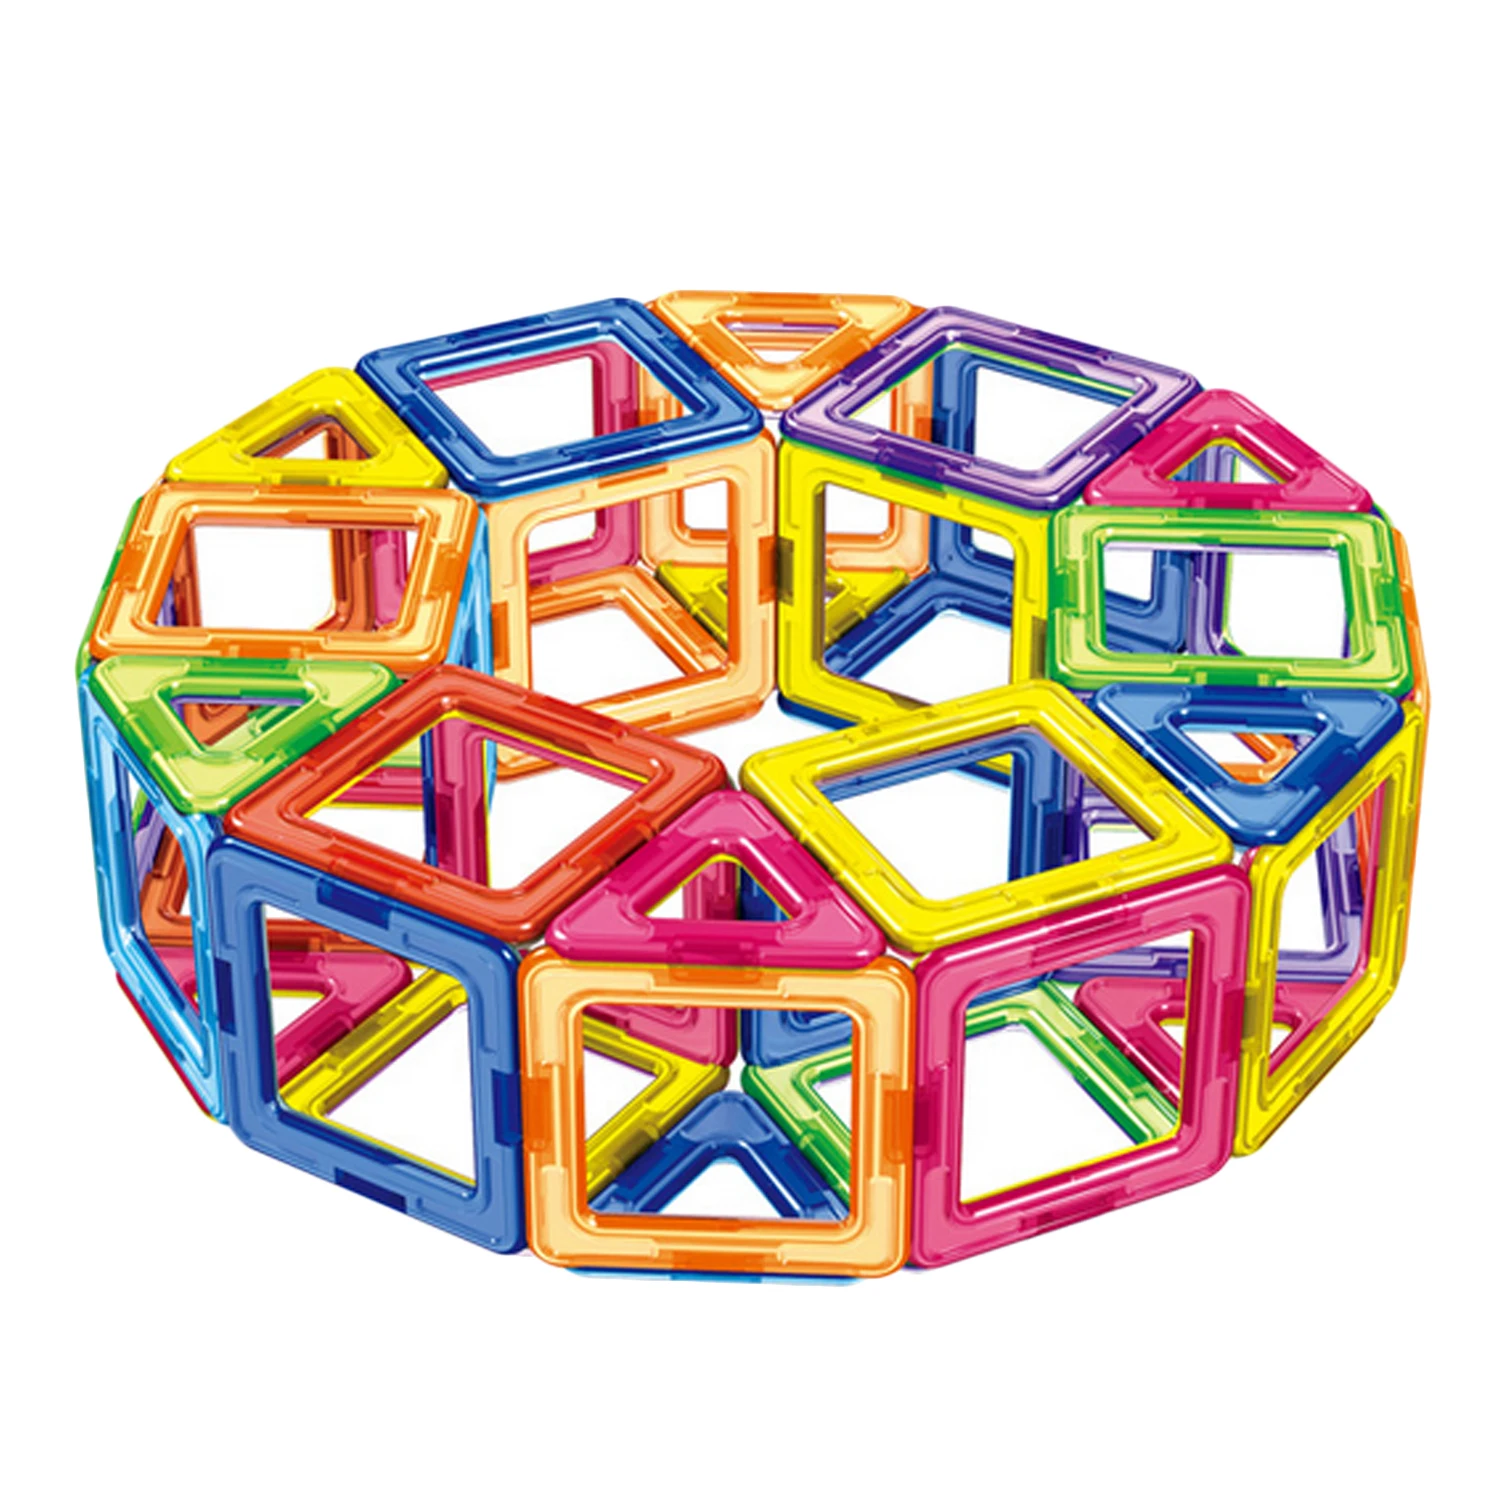 62pcs Plastic Triangle Square Pentagon Magnetic Building Blocks Stacking Bricks Building Construction Magnet Jigsaw Model Toy